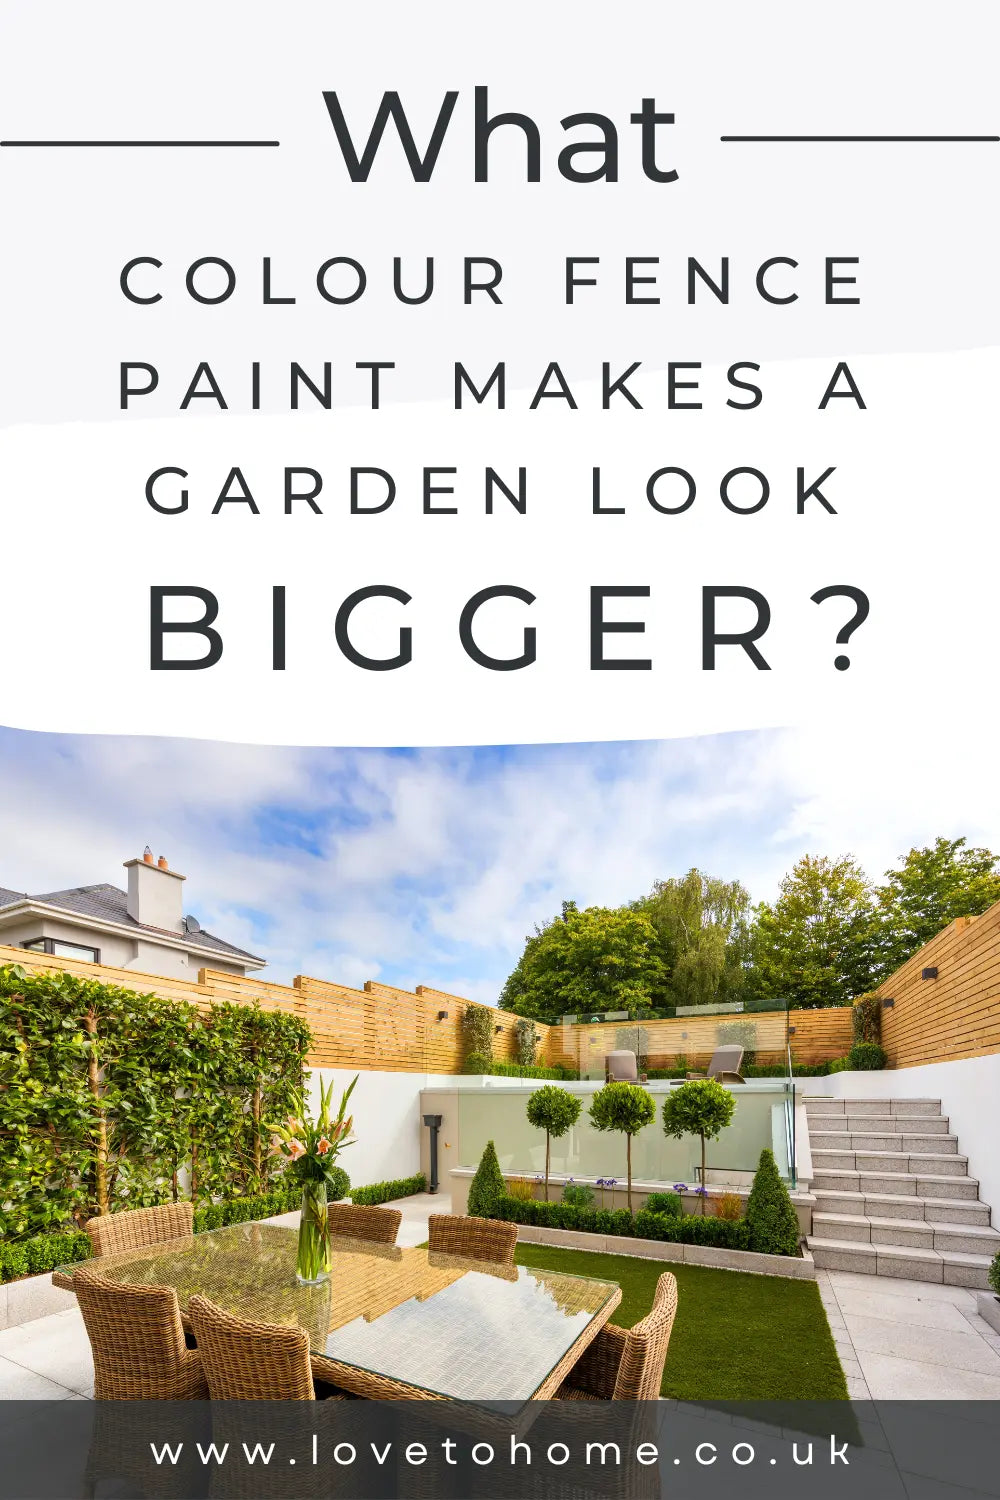 What Colour Fence Paint Makes a Garden Look Bigger?